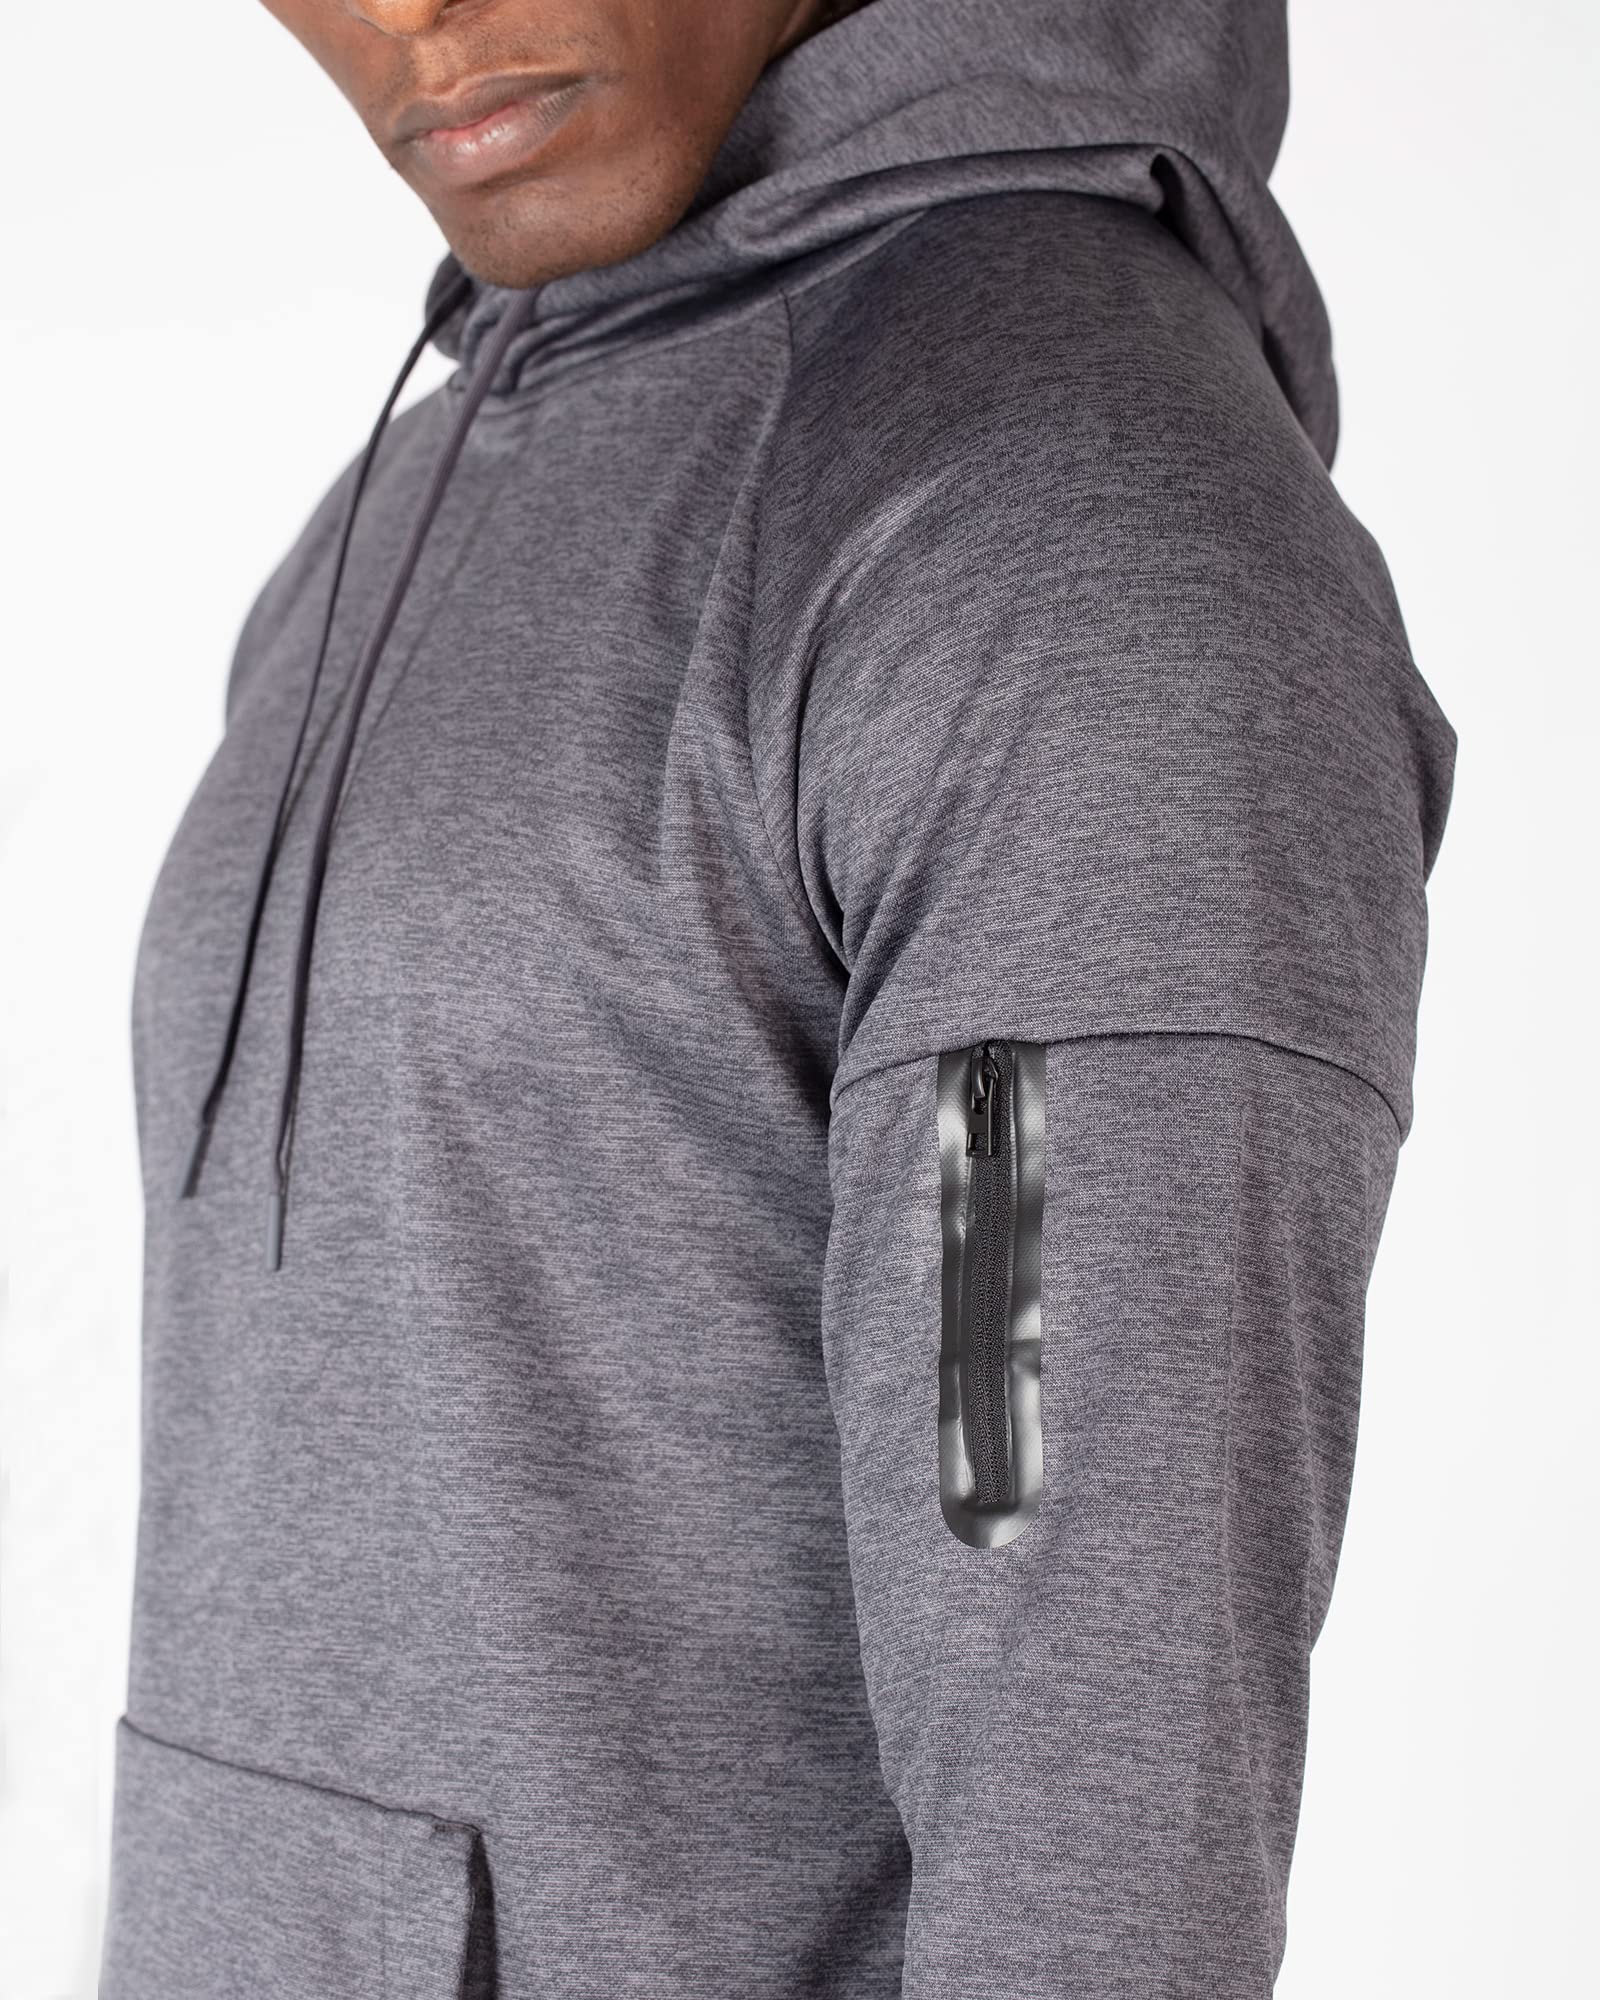 Layer 8 Men's Hoodie Performance Light Weight Tech Fleece Pullover Training Workout Athletic Sweatshirt Hooded Fitness Top (Small Basalt Hthr)